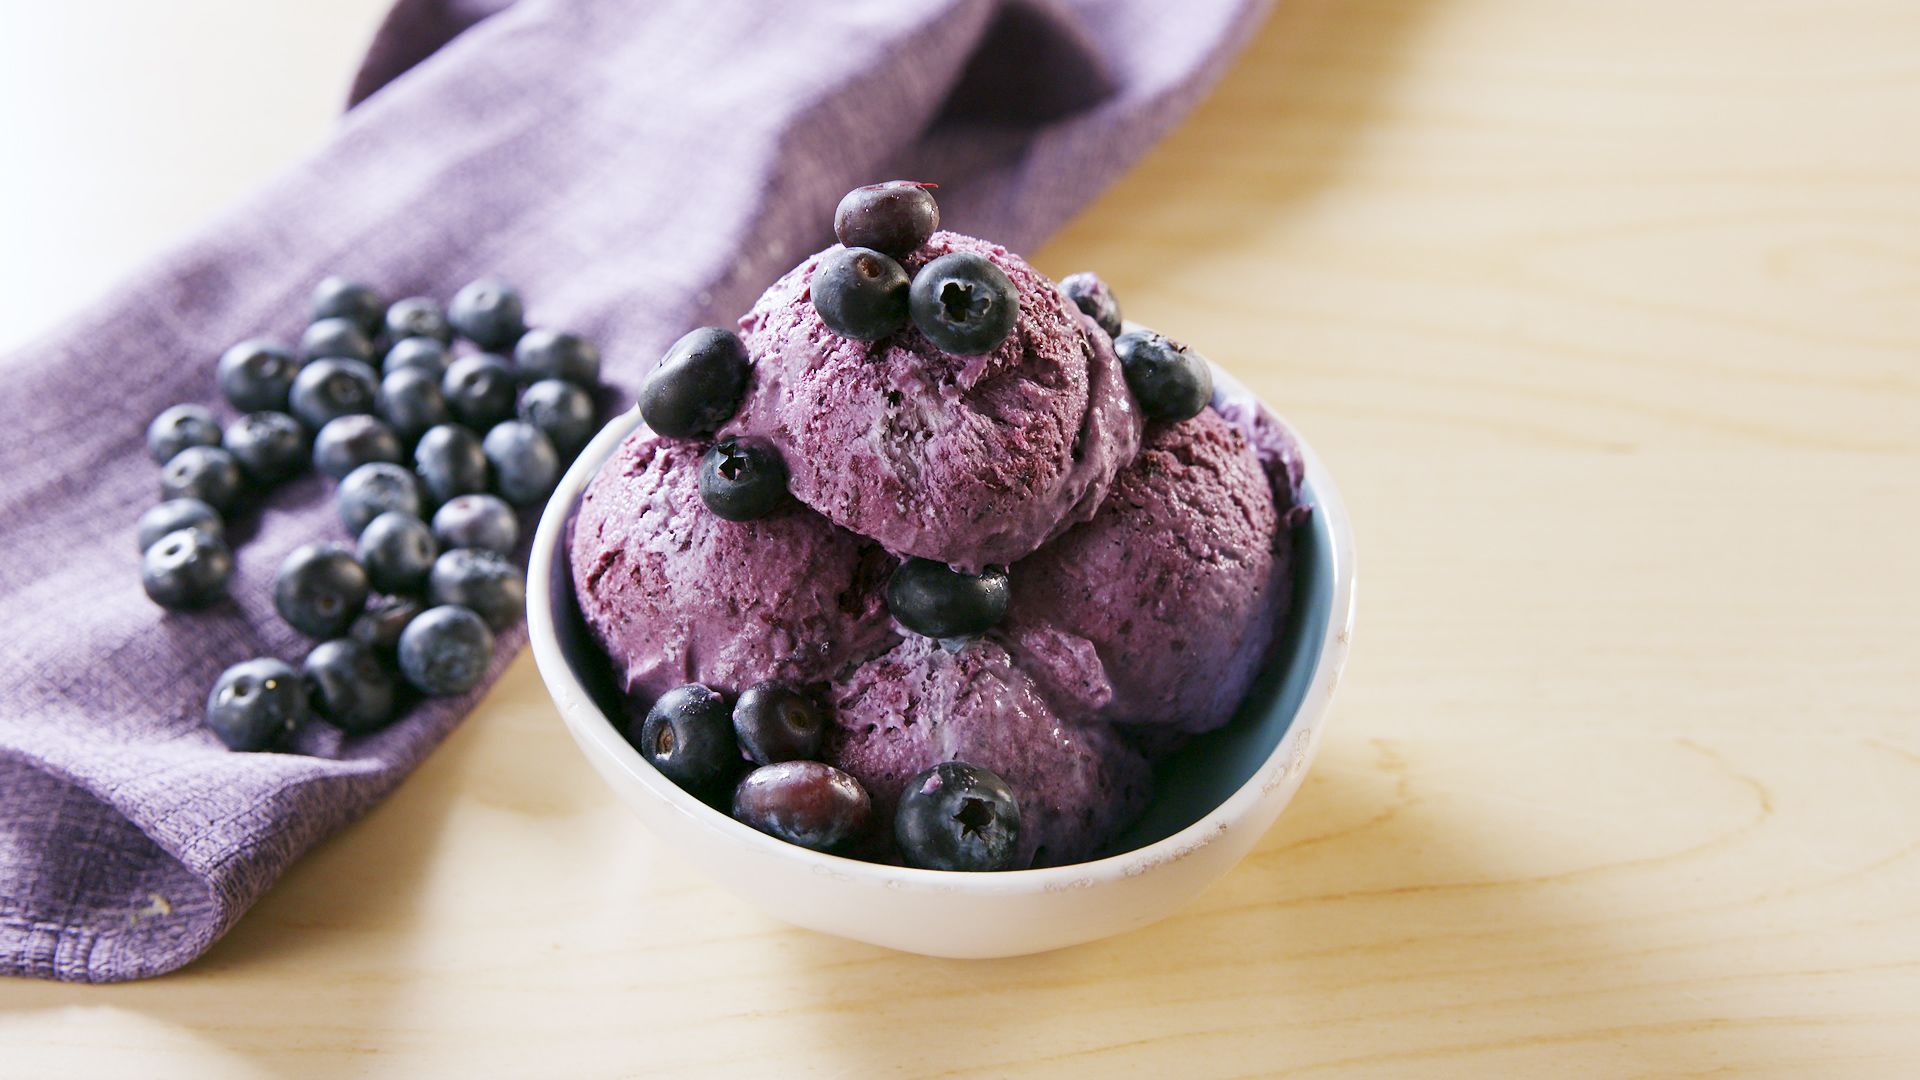 A Simple Recipe for Delicious Berry Ice Cream